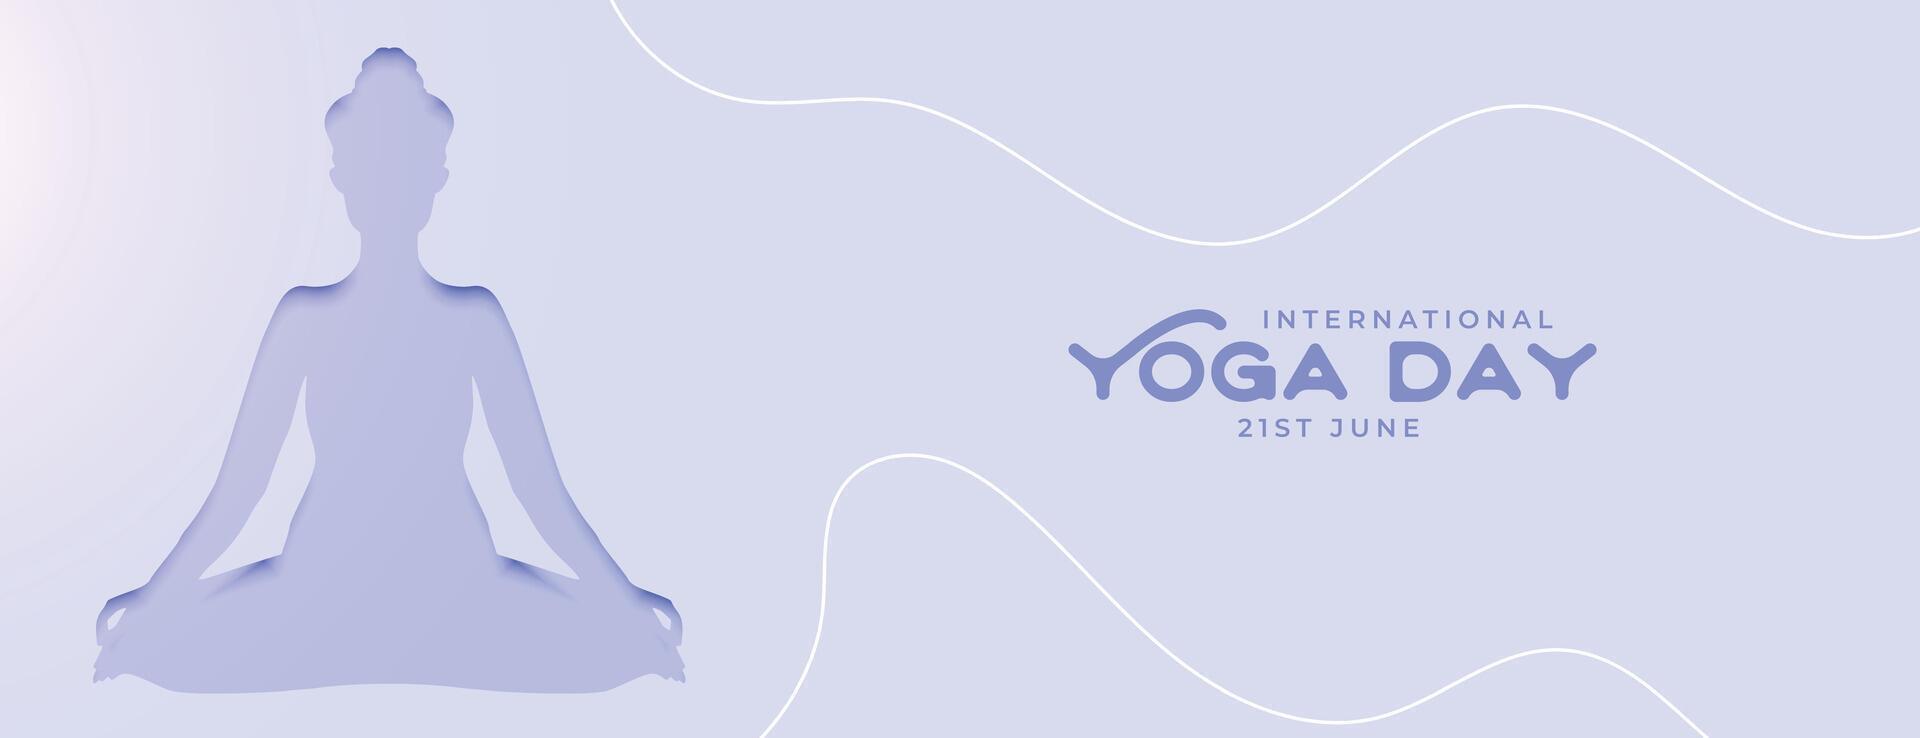 Papier Schnitt Stil International Yoga Tag Poster zum gesund Verstand vektor